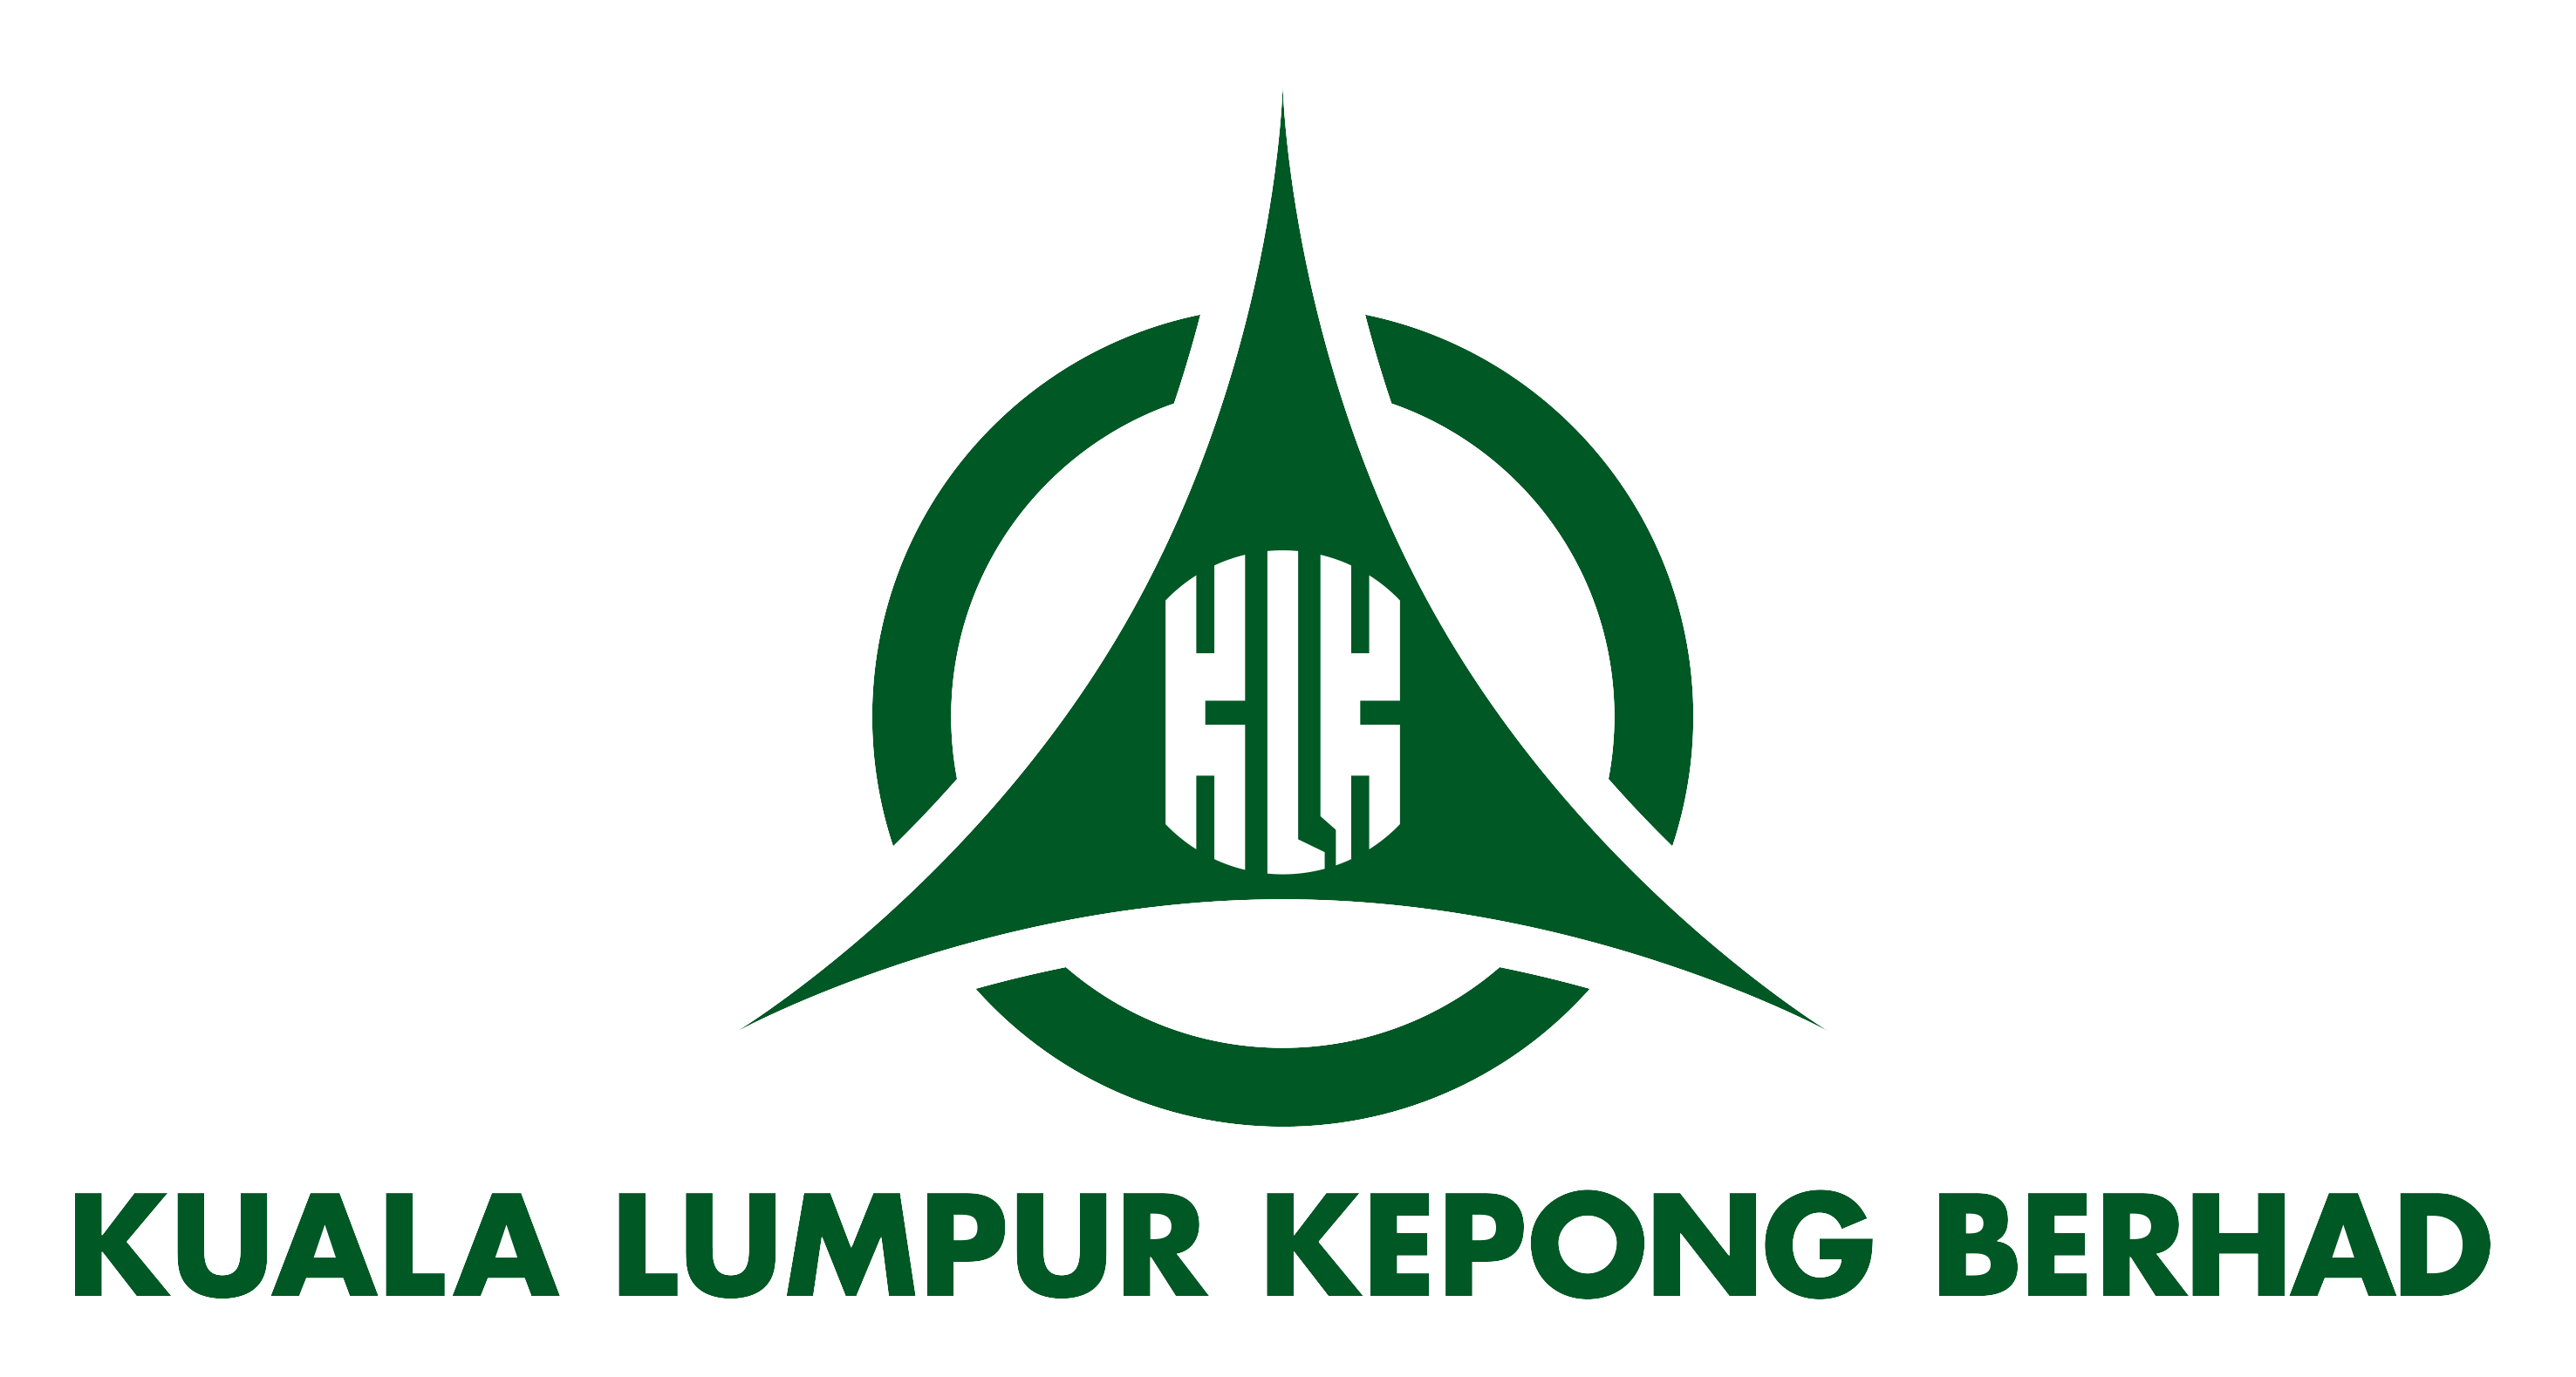 Kuala Lumpur Kepong Berhad